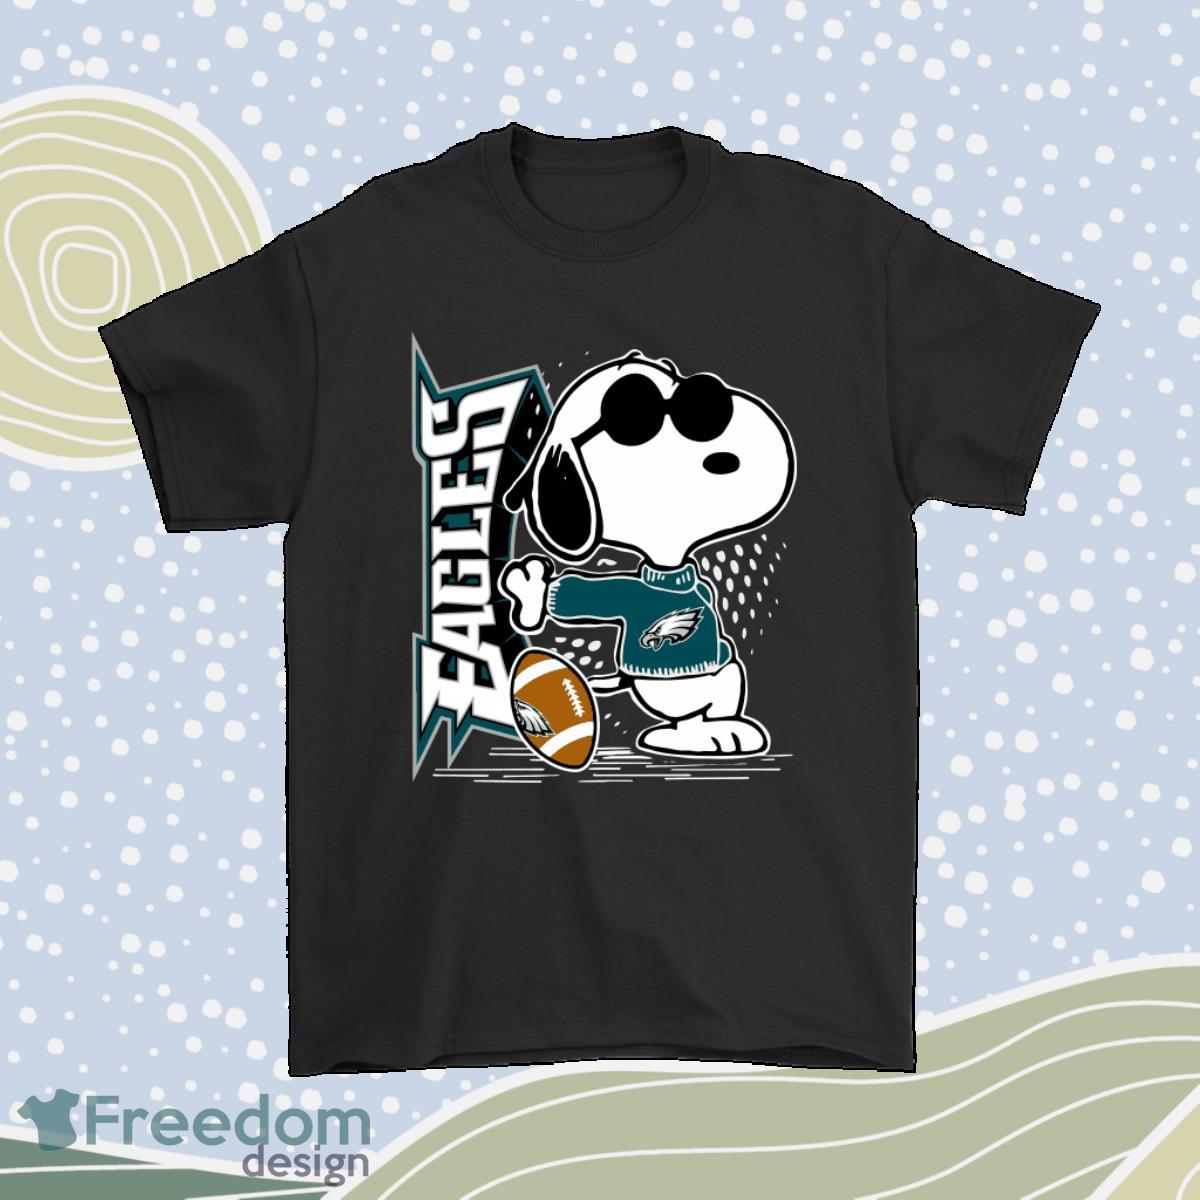 Joe Cool Snoopy Philadelphia Eagles Nfl Shirt Product Photo 1